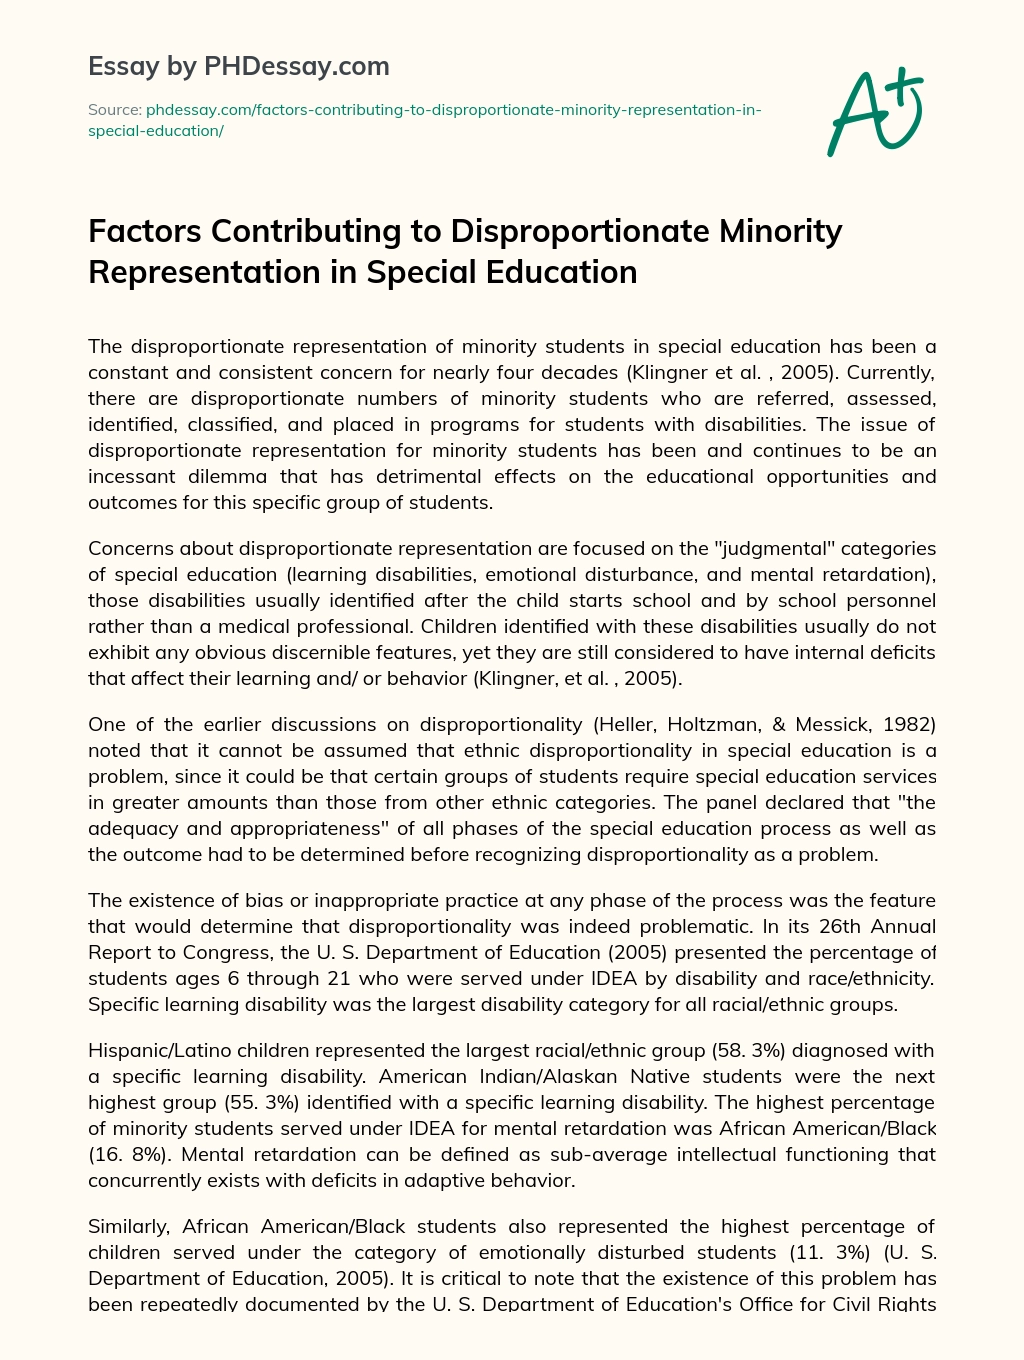 Factors Contributing to Disproportionate Minority Representation in Special Education essay